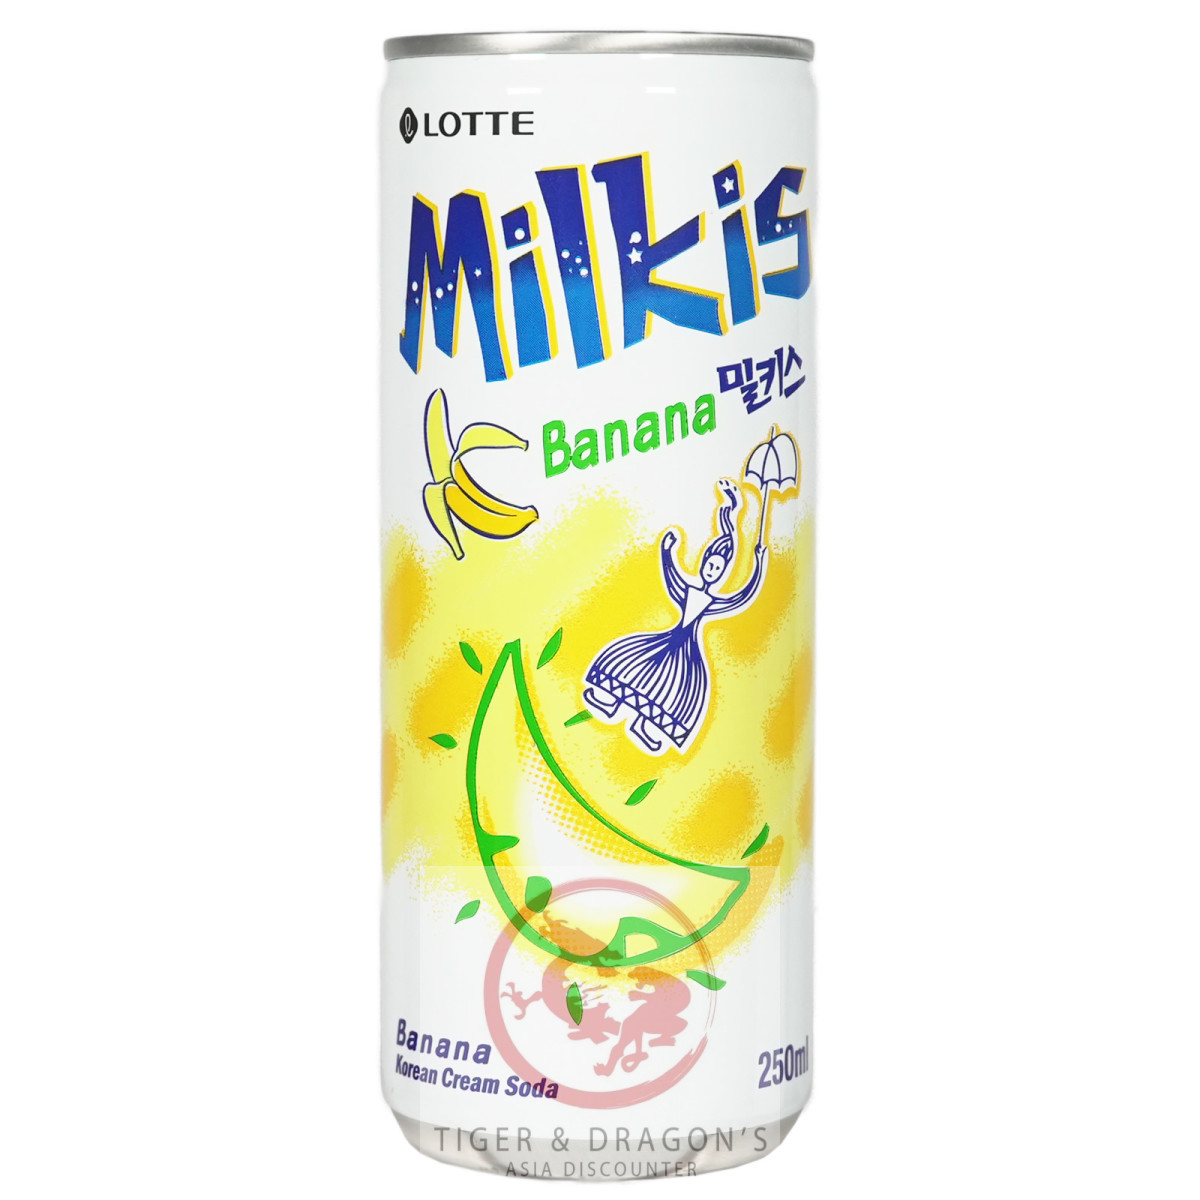 Lotte Milkis Banane Geschmack 250ml zzgl. 0,25€ Pfand